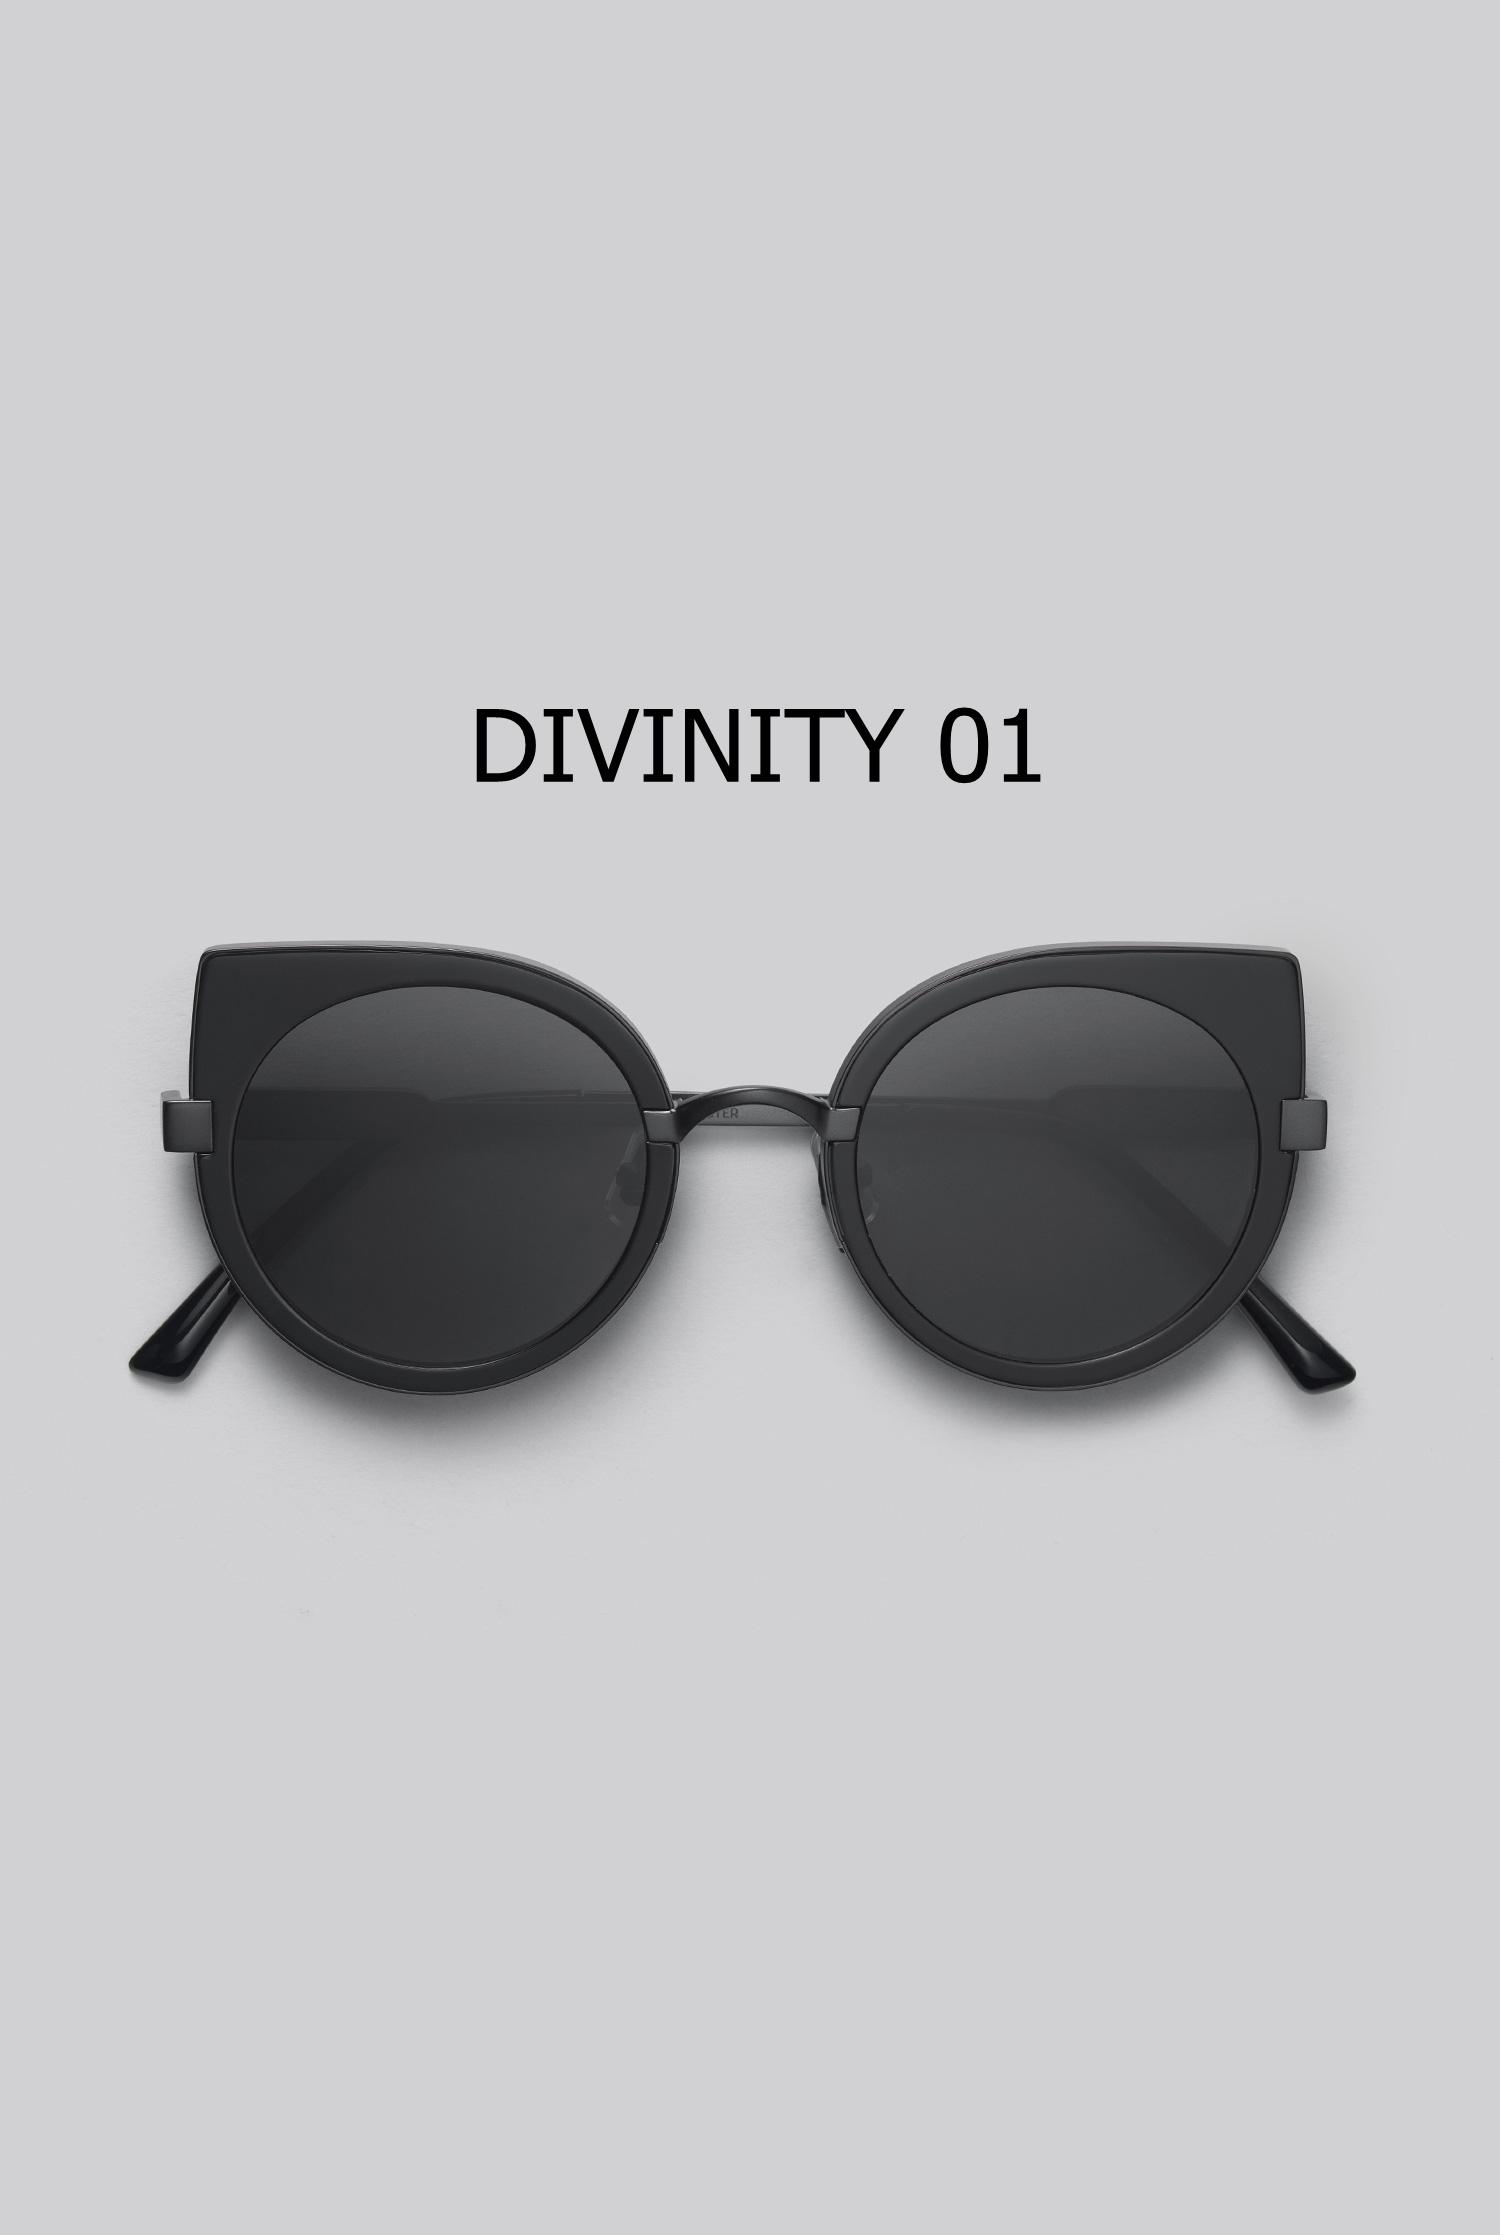 DIVINITY 01 